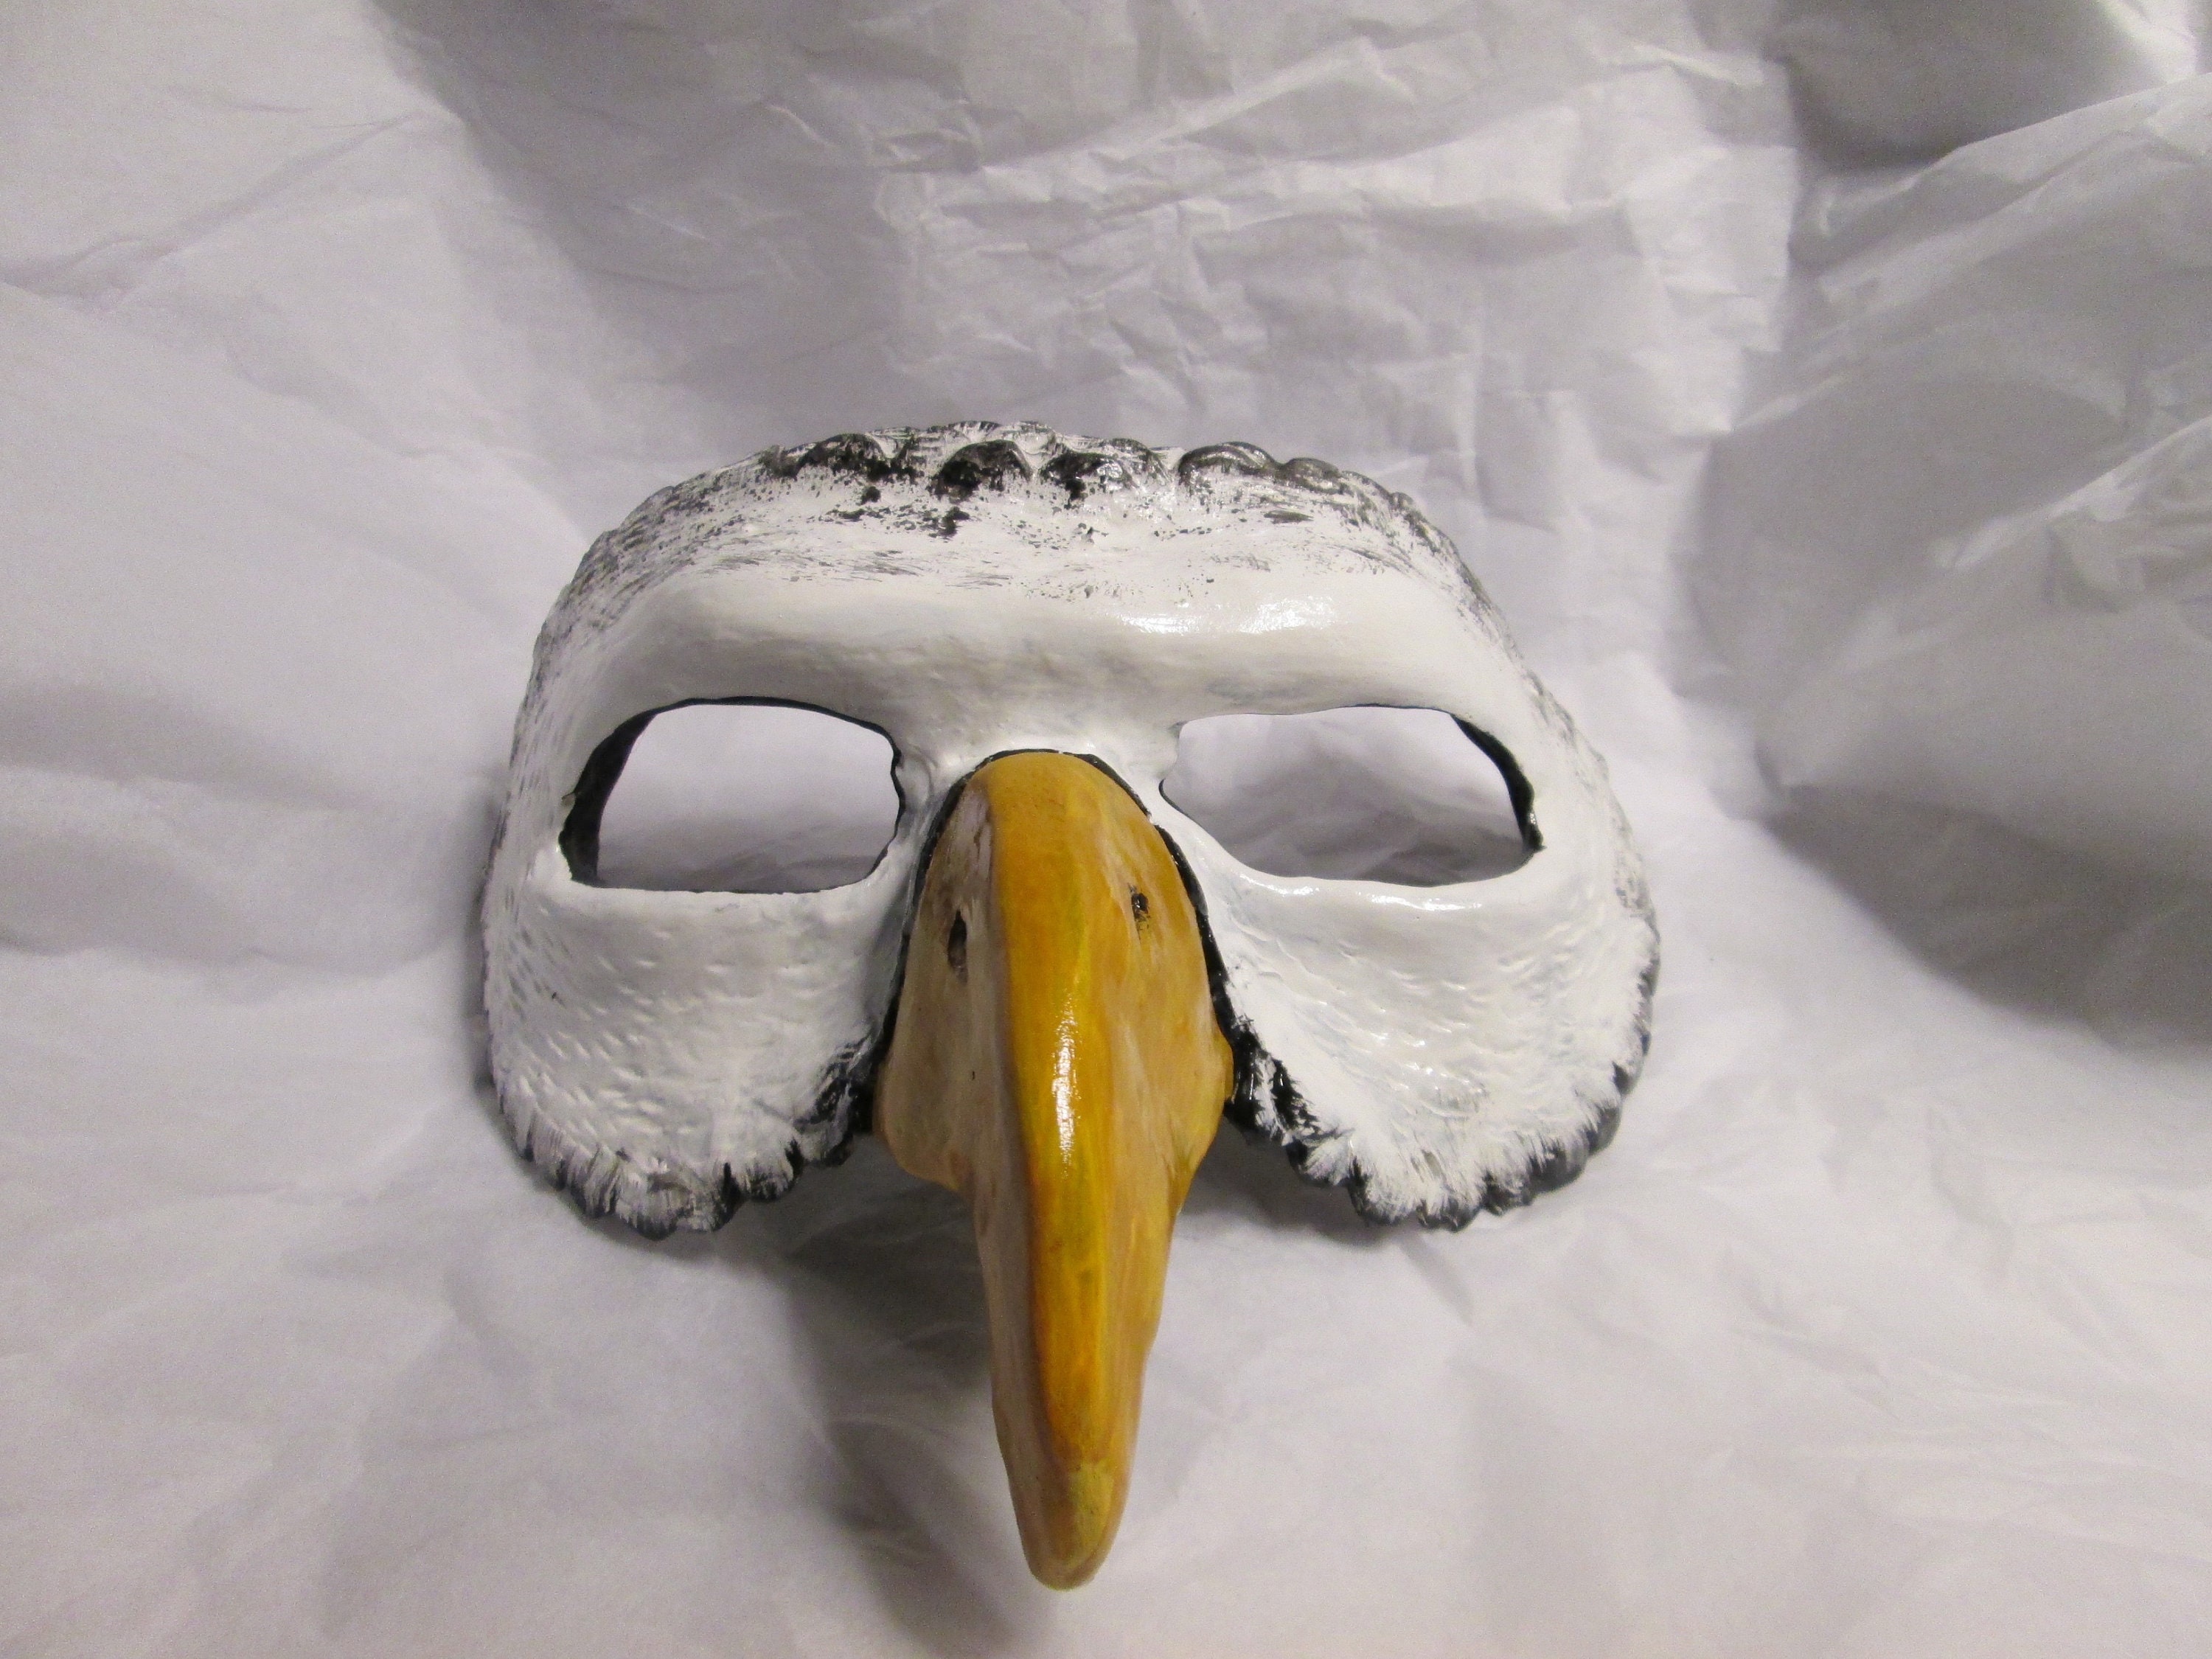 Bald Eagle Mask Realistic American Pride Bird Animal Halloween Costume M8009